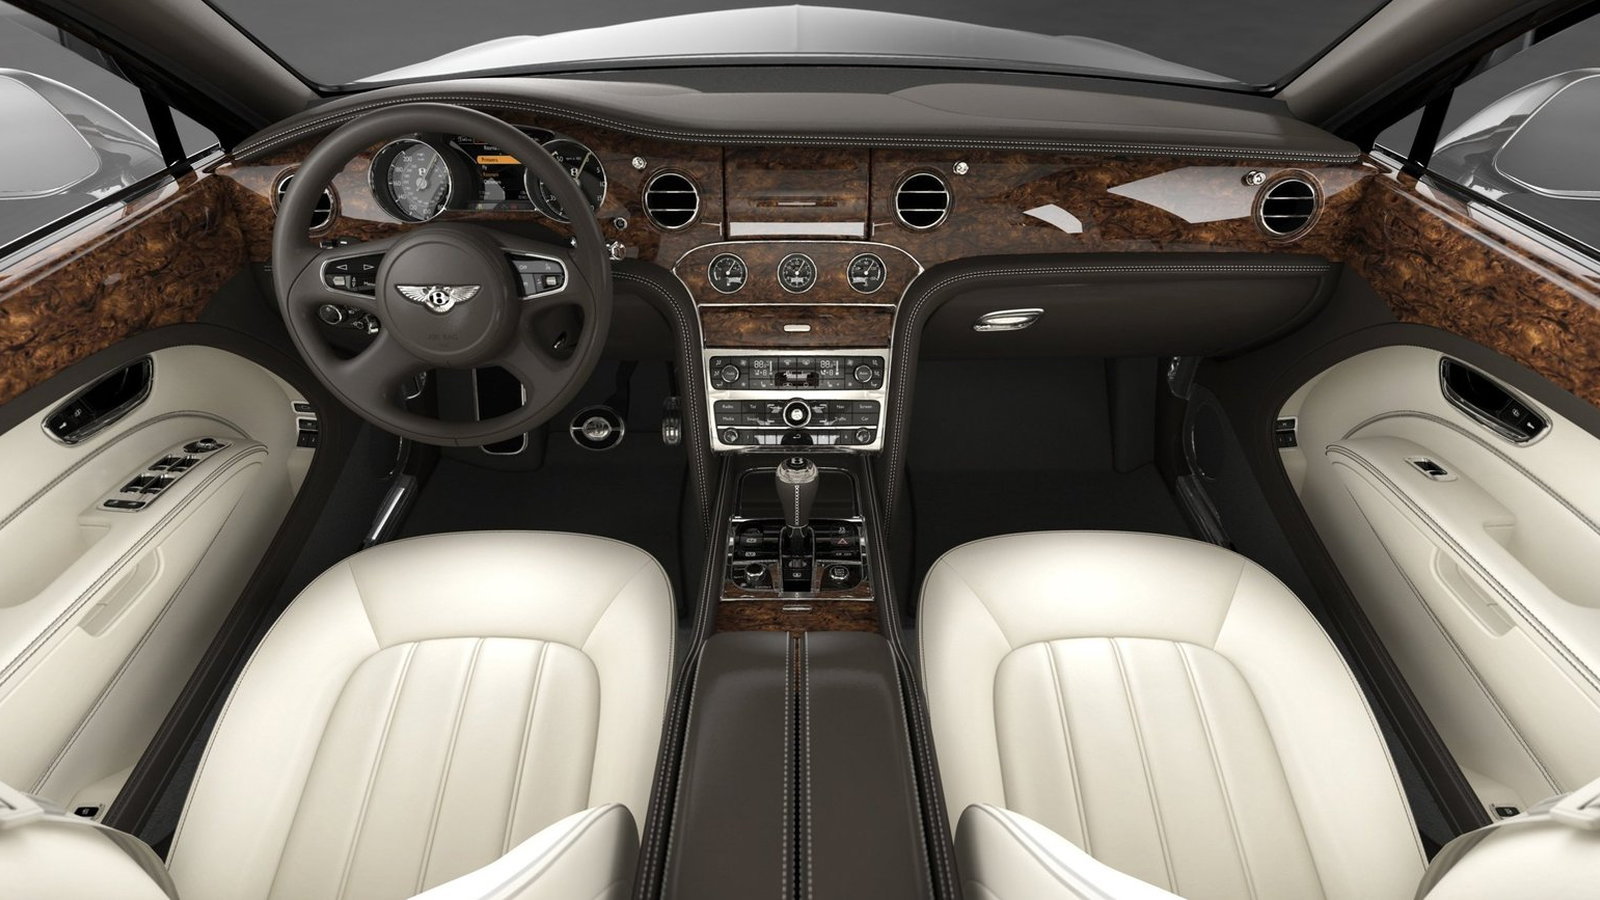 Building the 2011 Bentley Mulsanne's interior